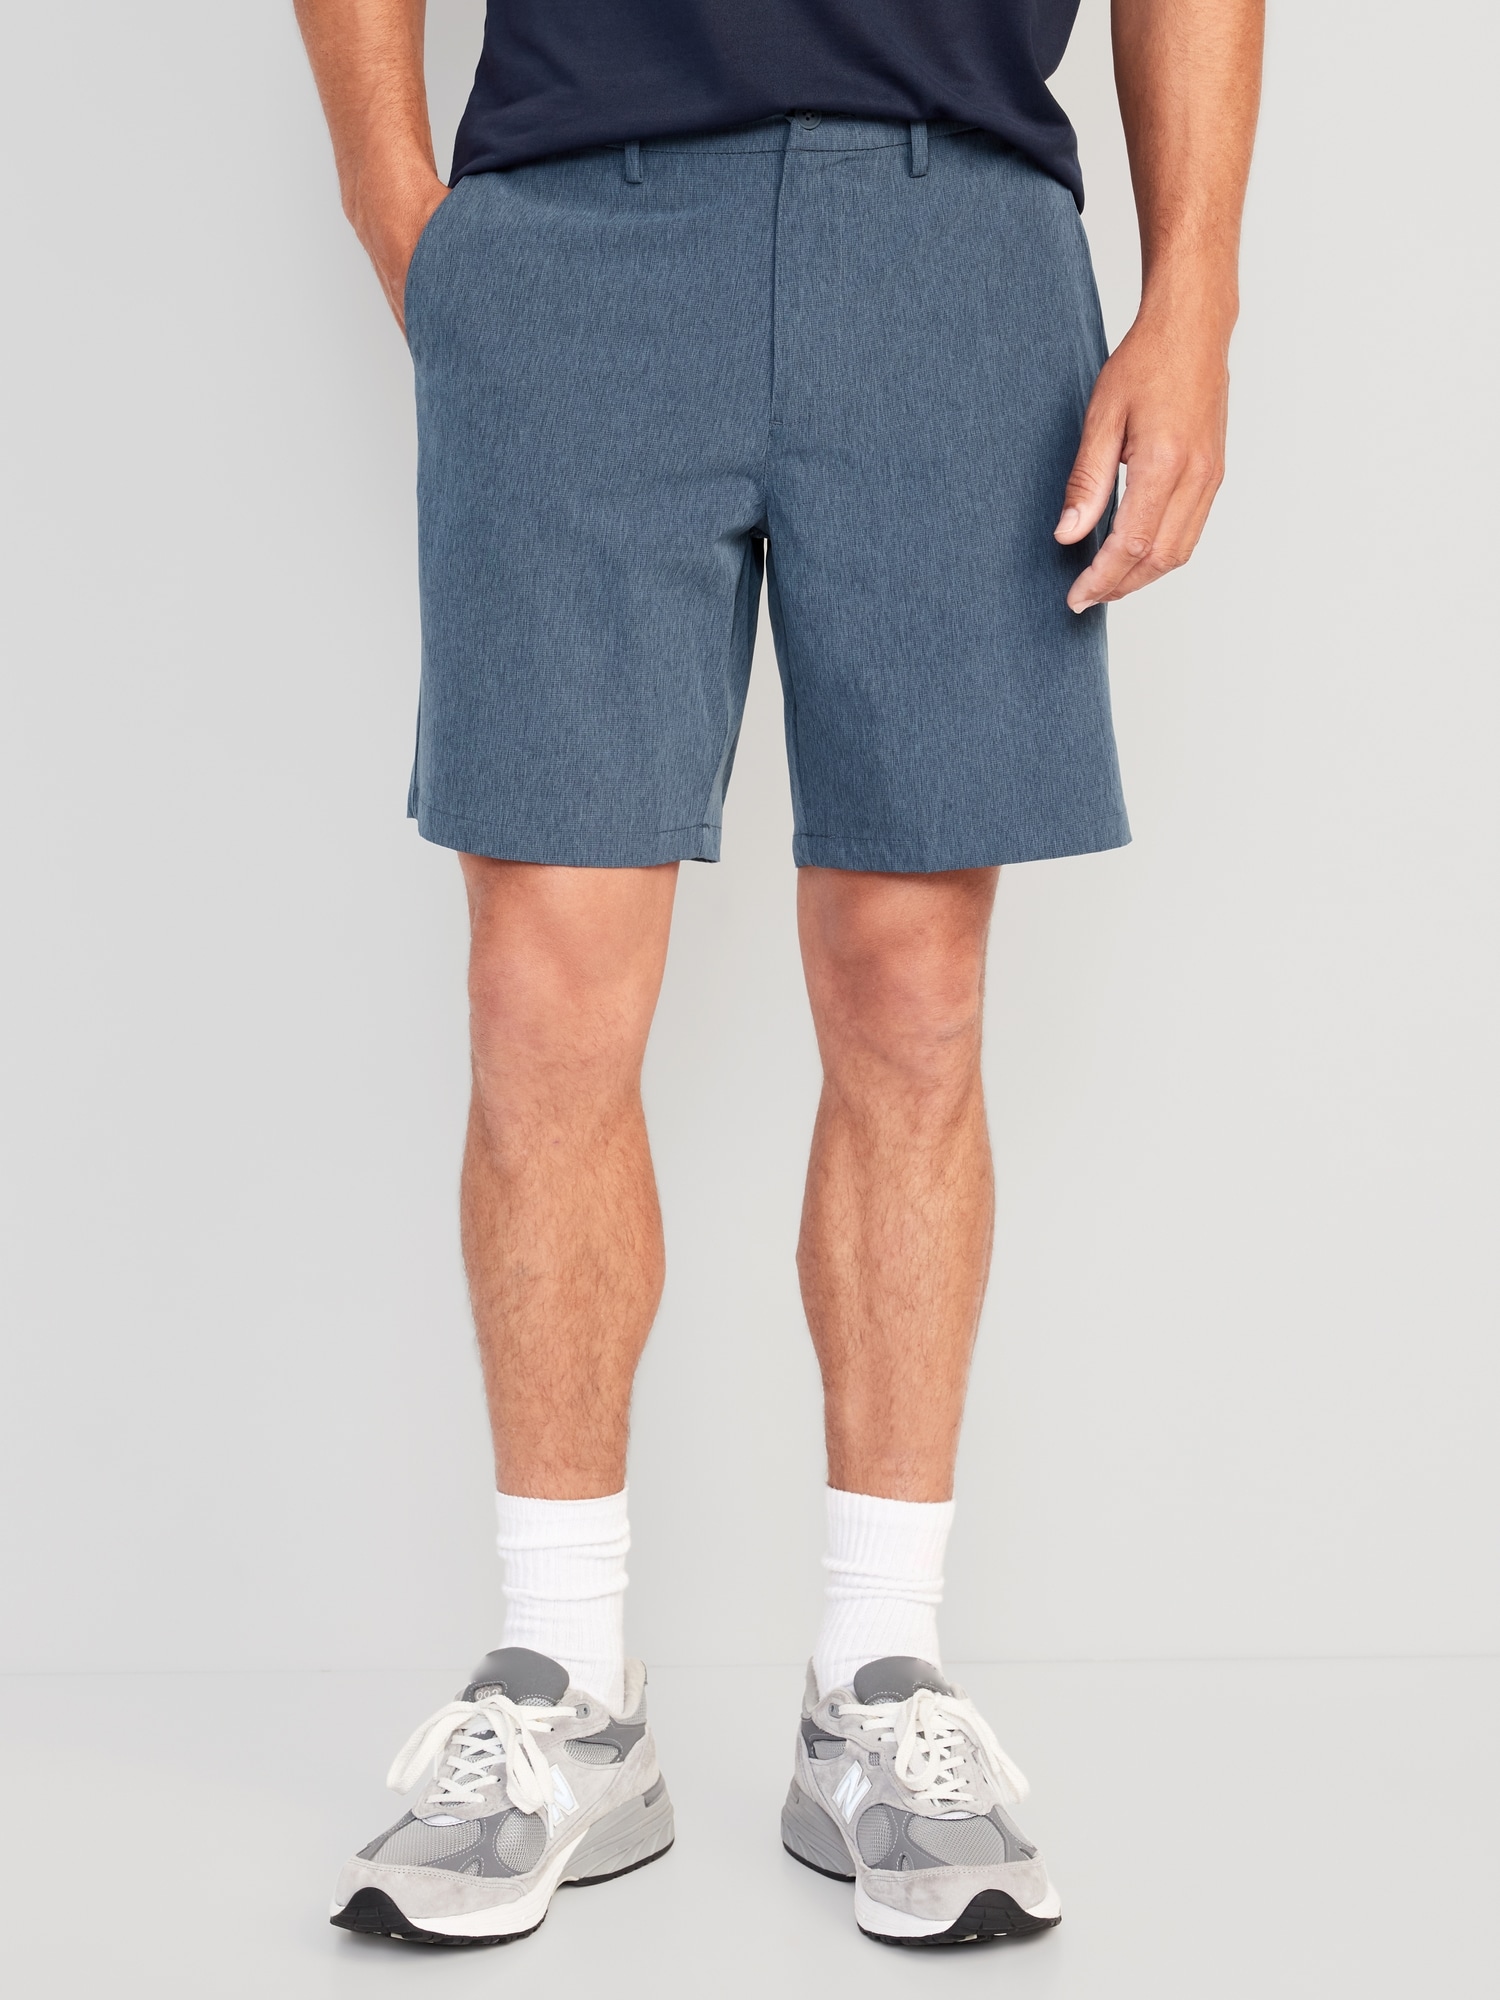 Mens Outdoor Shorts